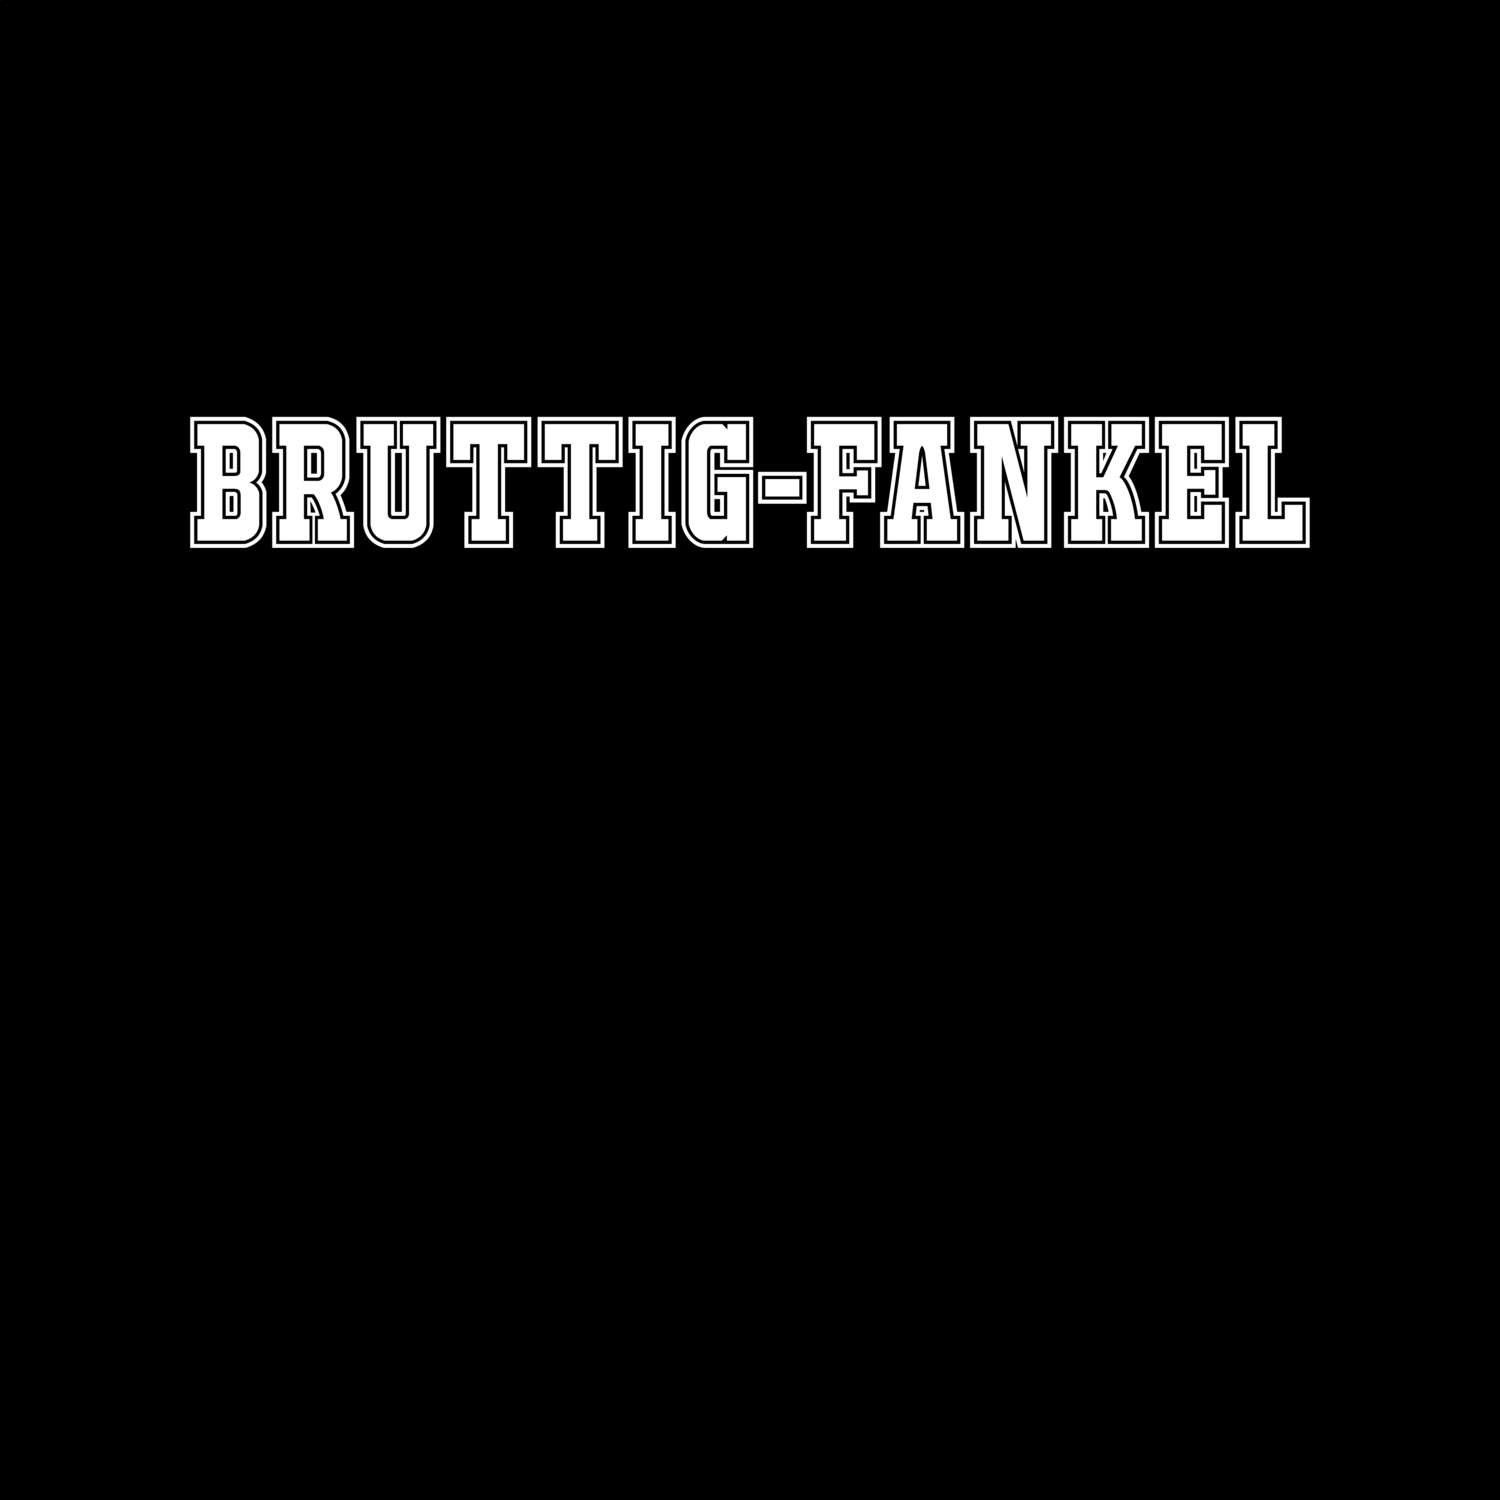 Bruttig-Fankel T-Shirt »Classic«